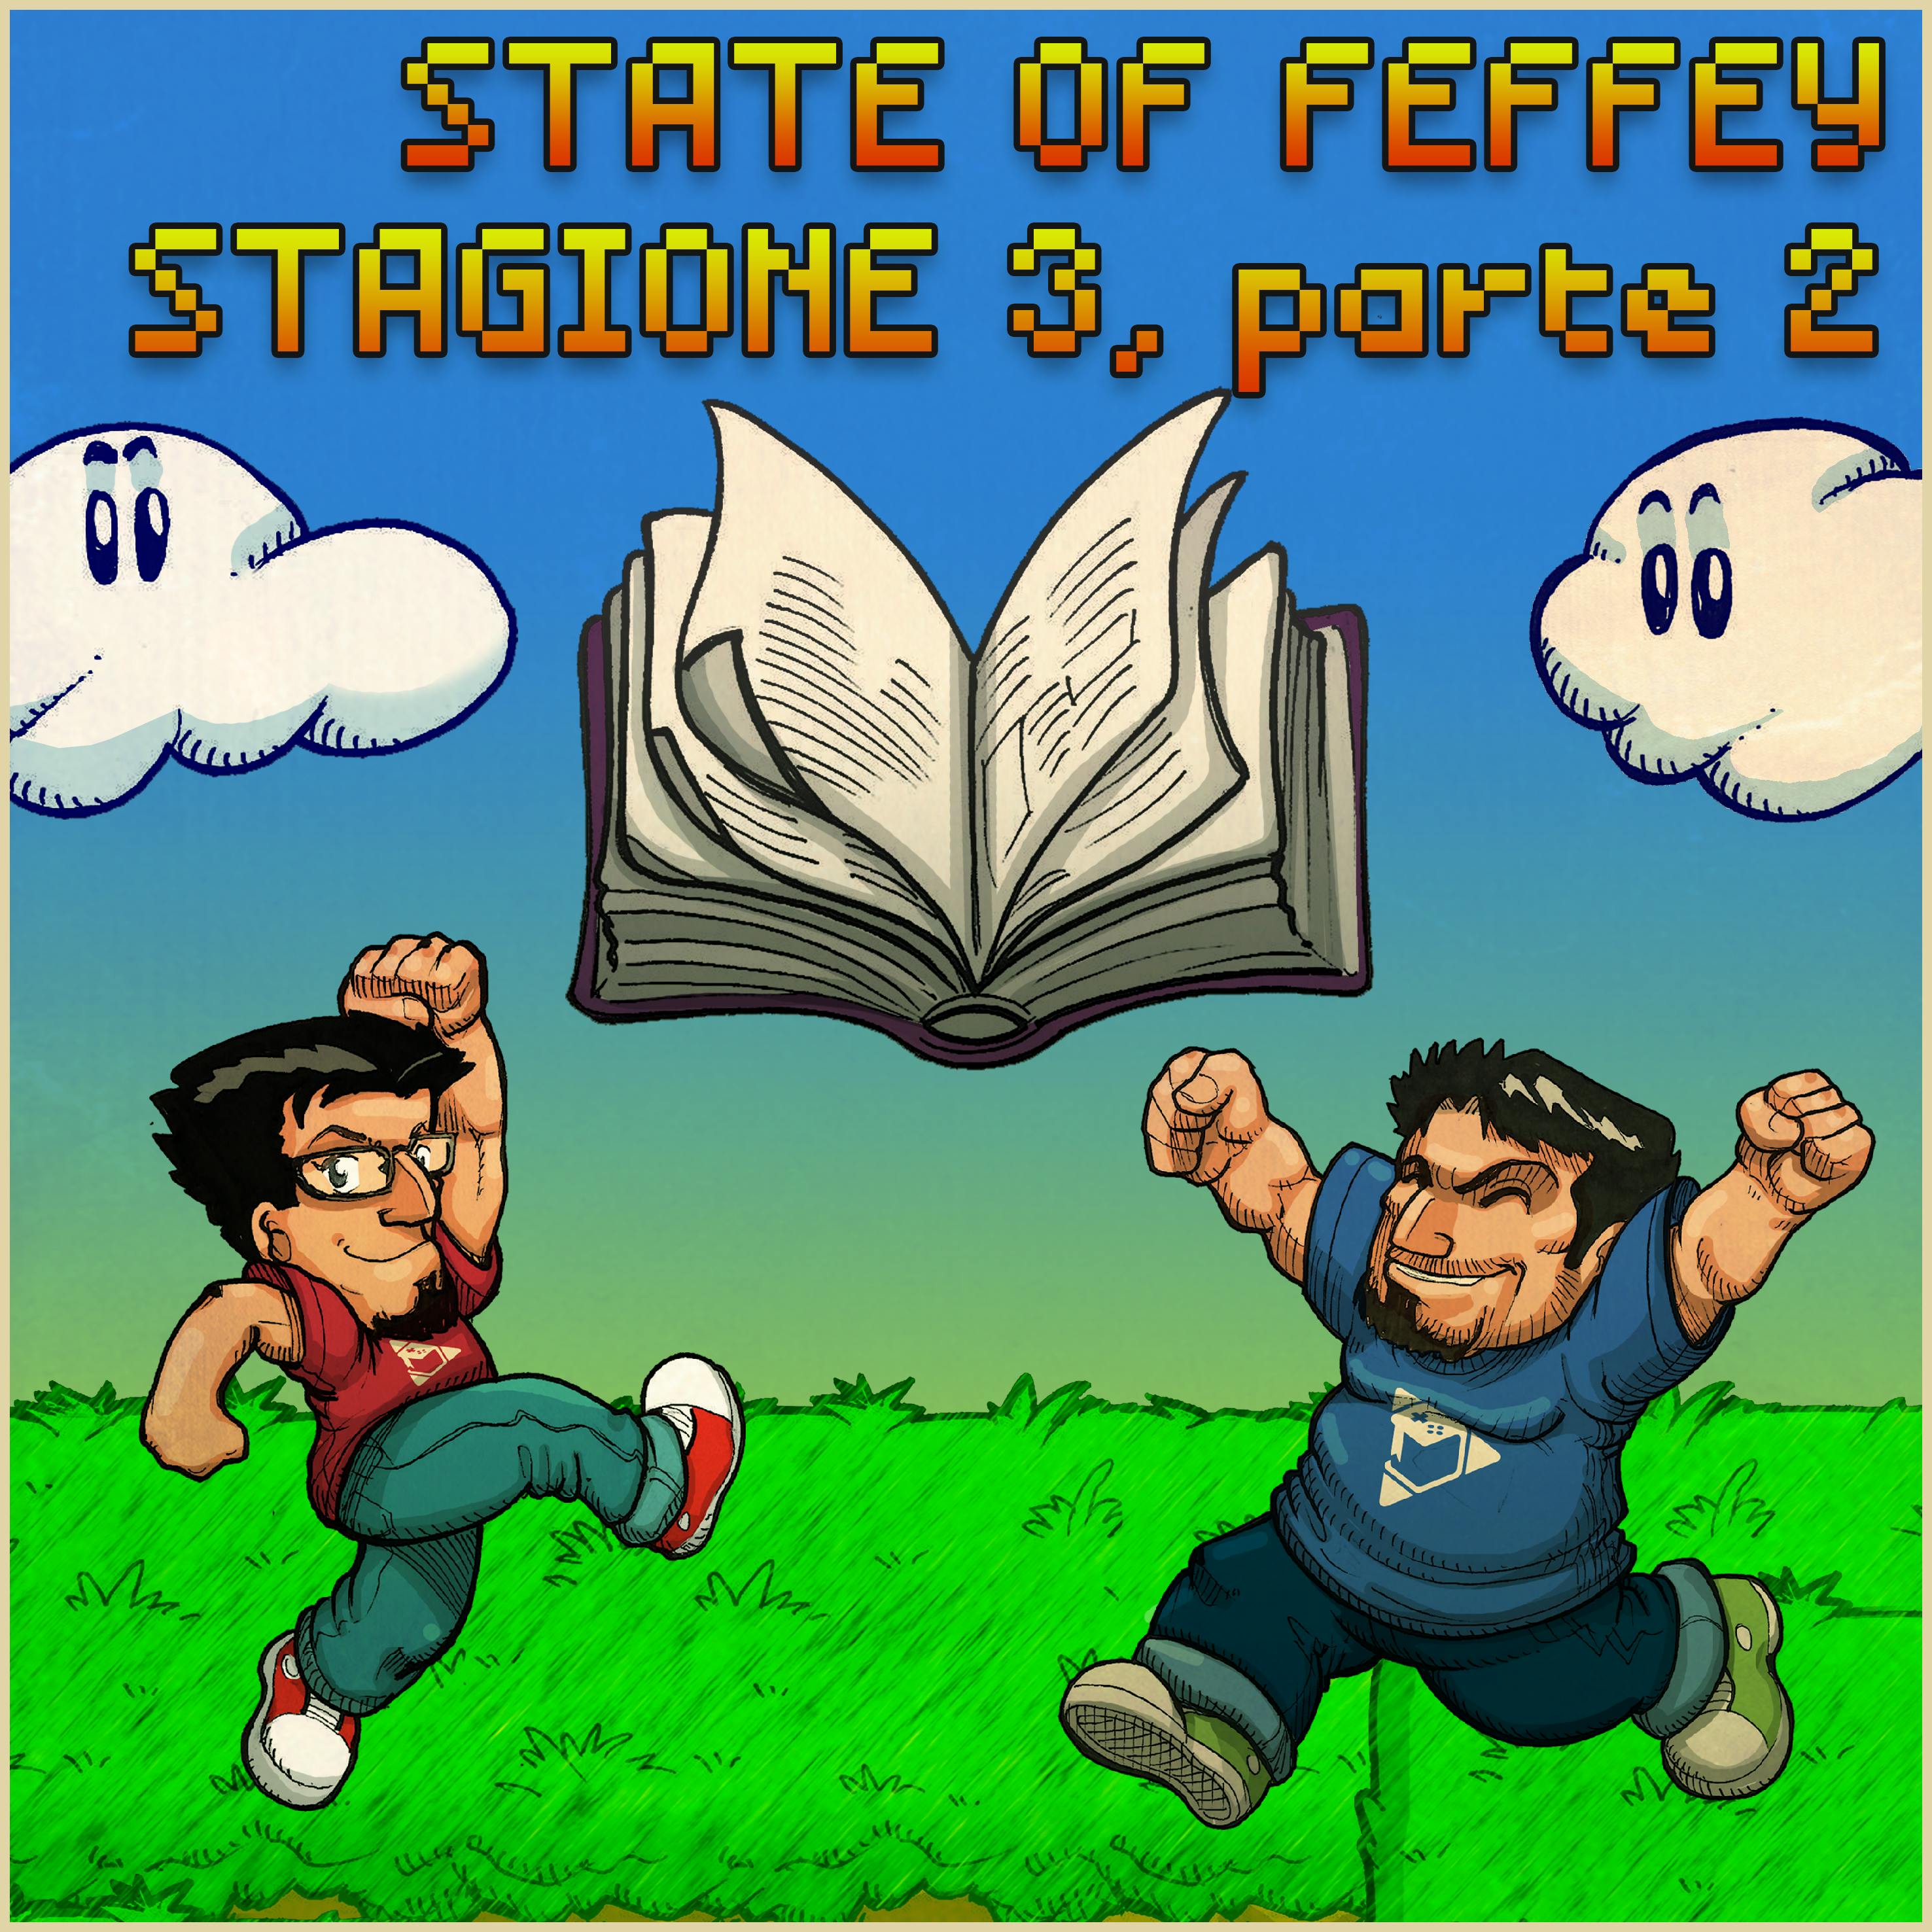 State of Feffey: Stagione 3, parte 2